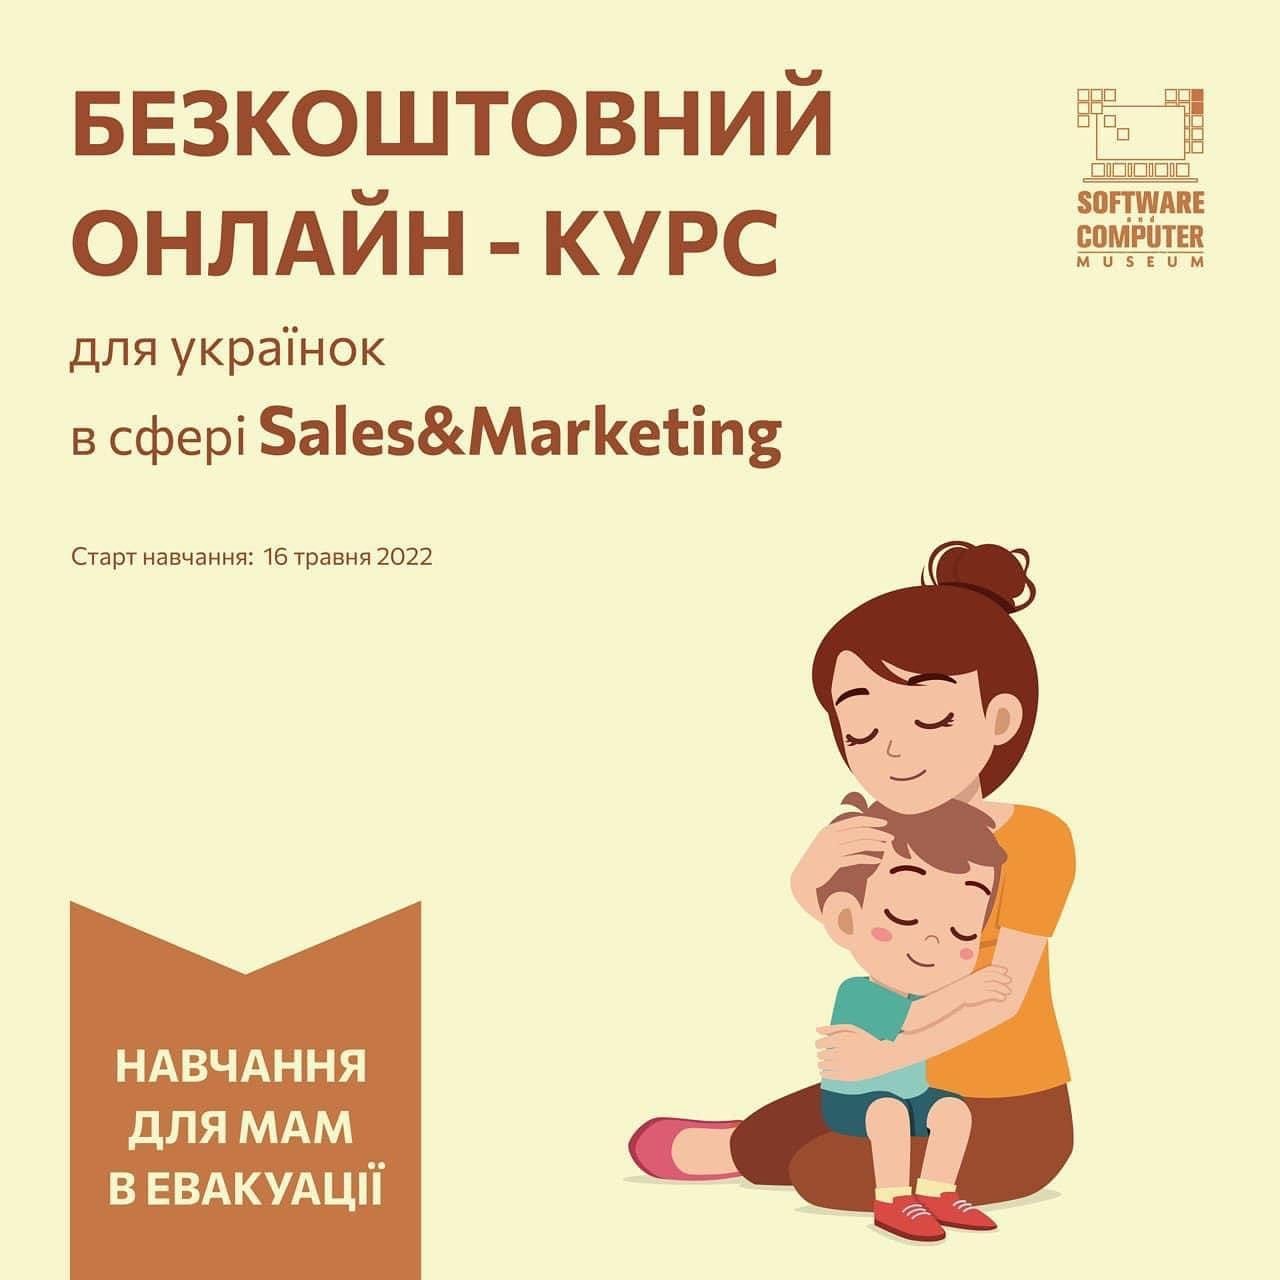 Онлайн-курс для украинок в сфере Sales&Marketing